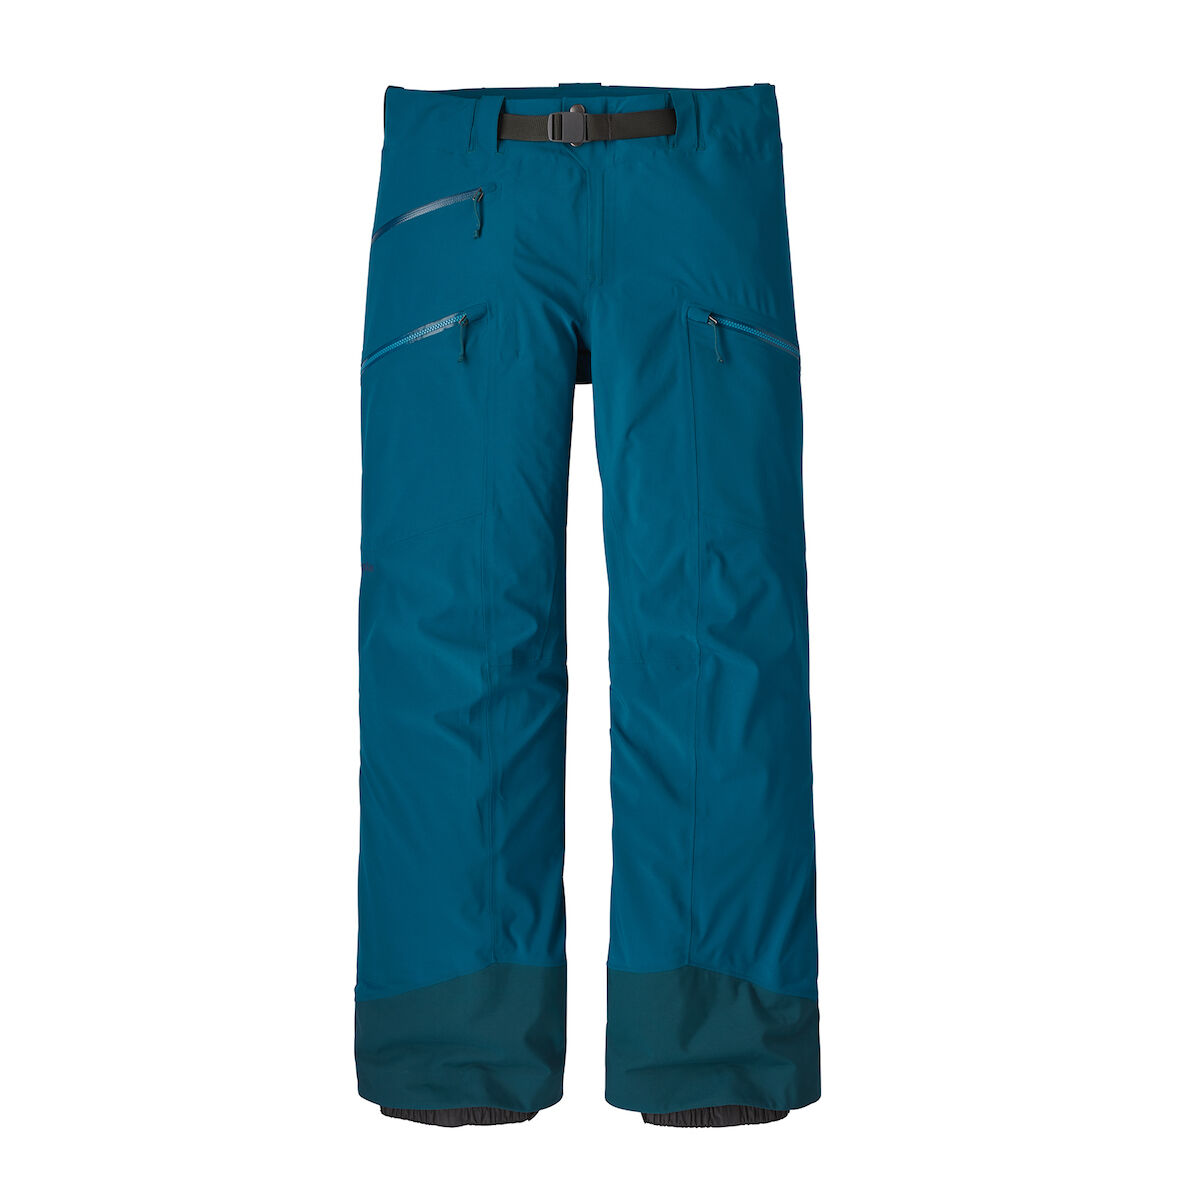 Patagonia - Descensionist Pants - Pantalón de esquí - Hombre